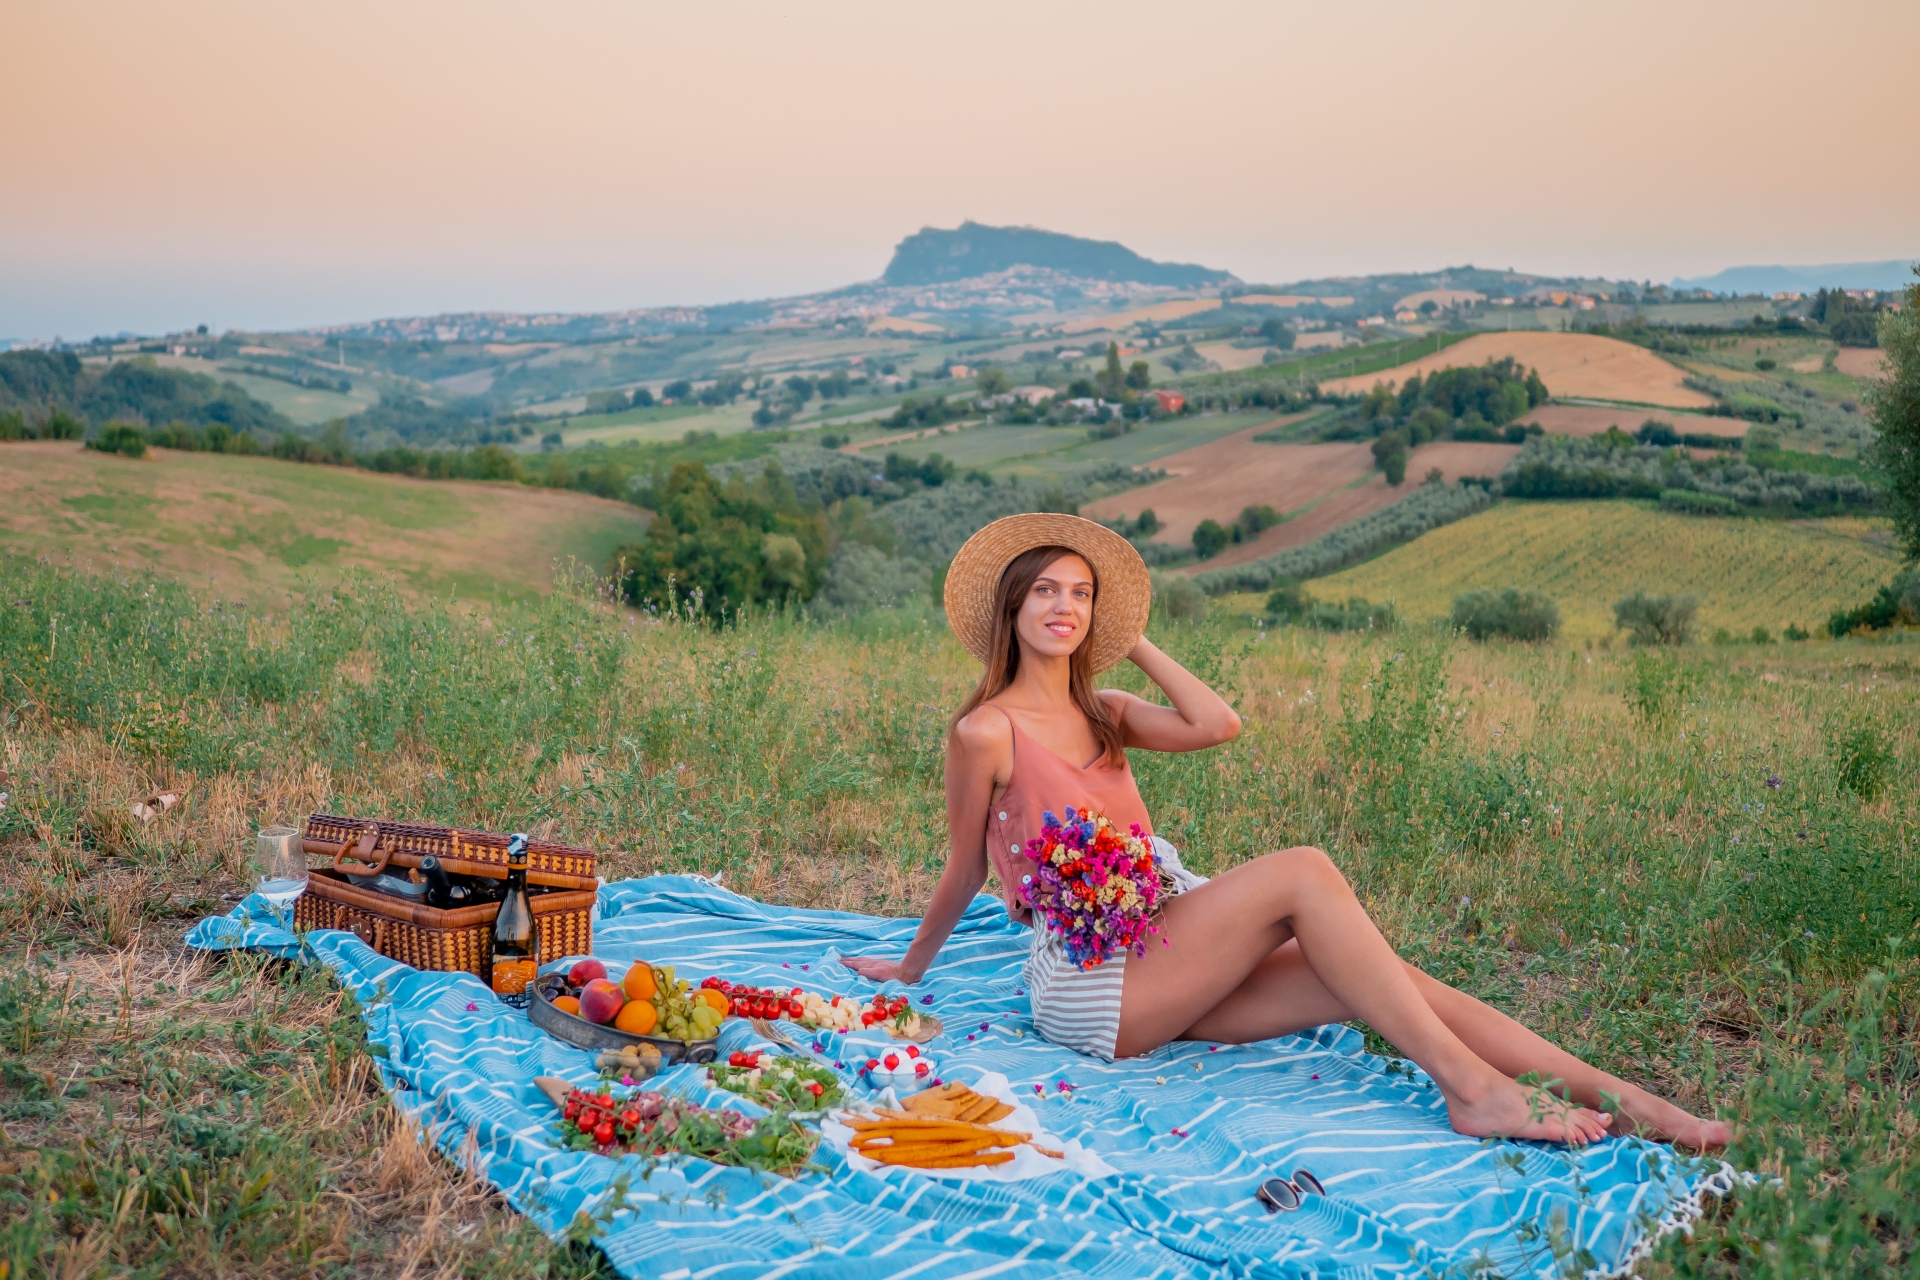 Panoramic photo picnic in Romagna hills near Rimini